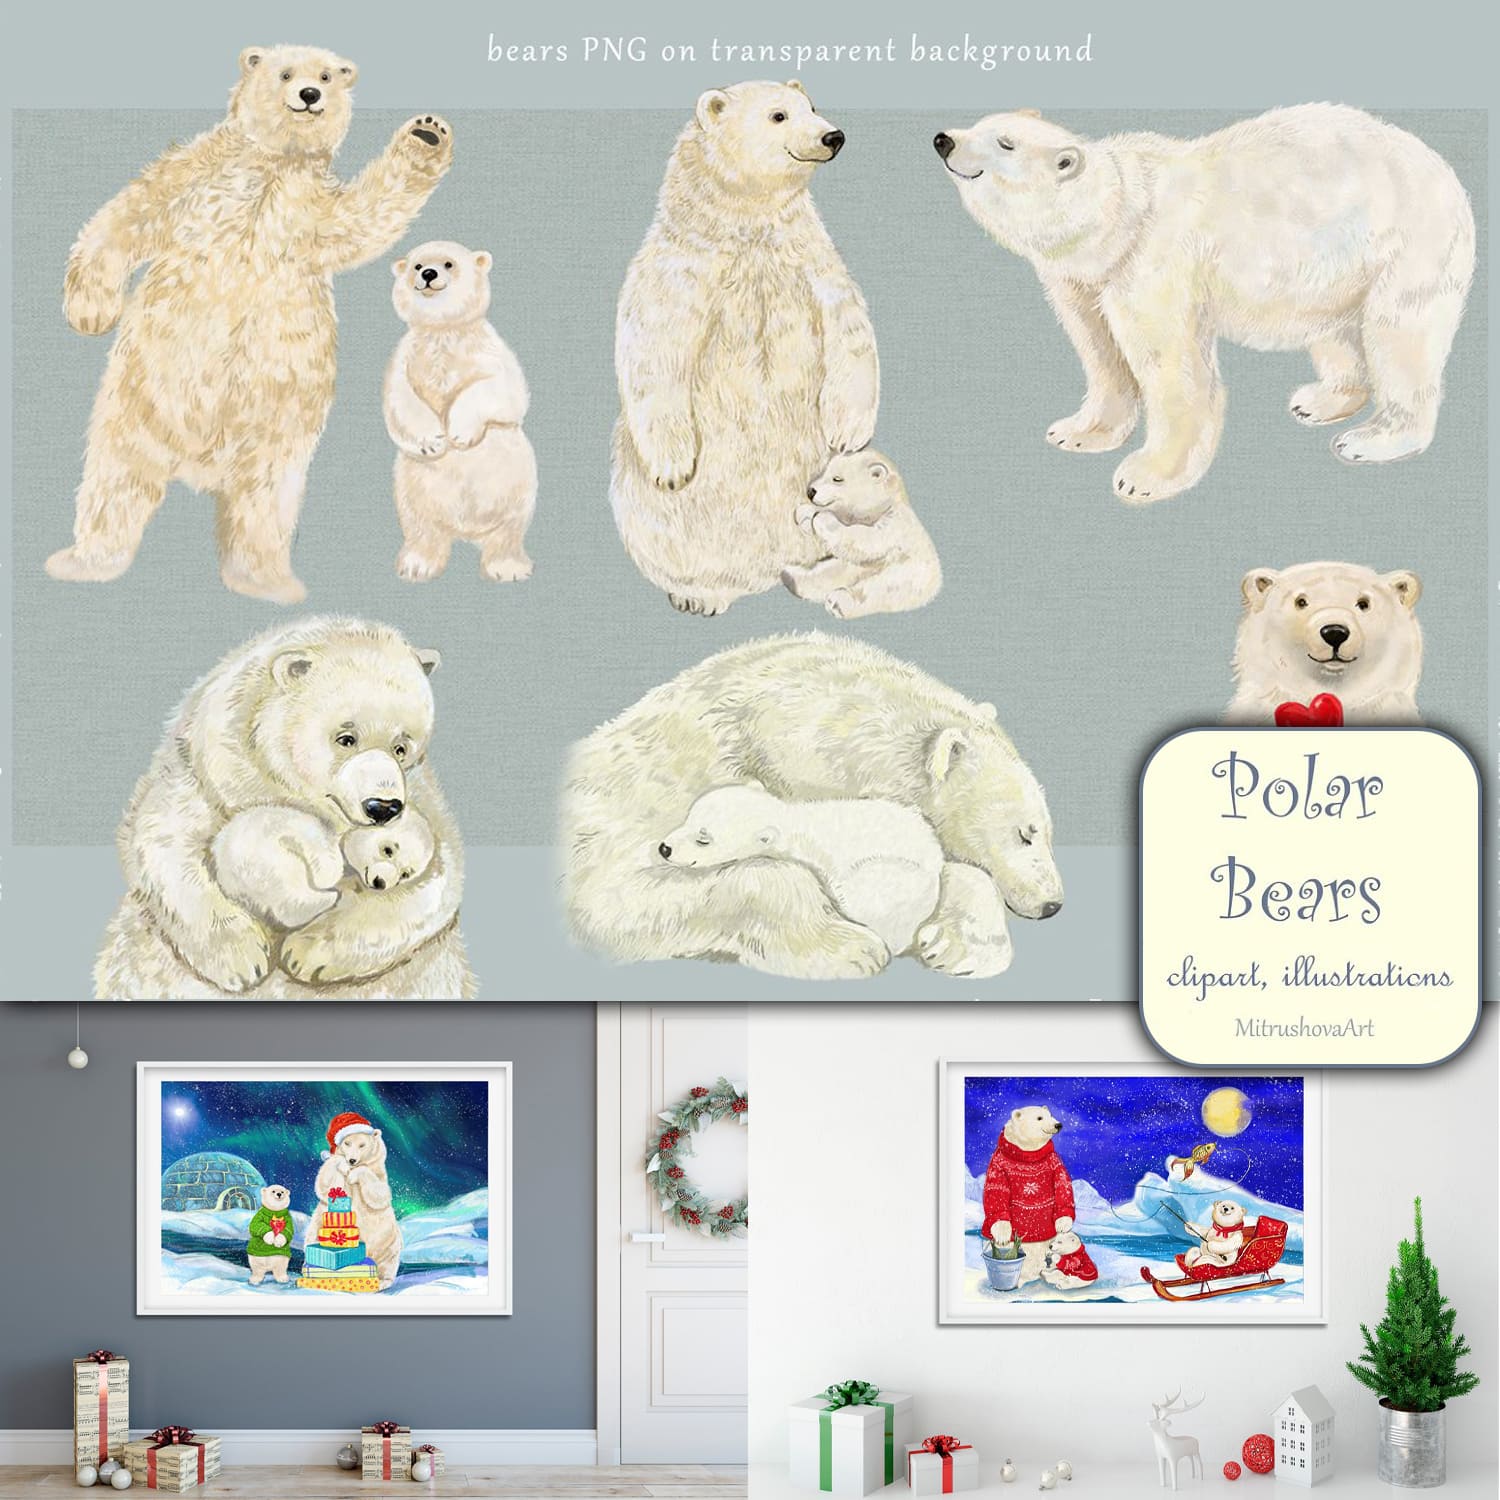 Polar Bear clipart illustrations cover.